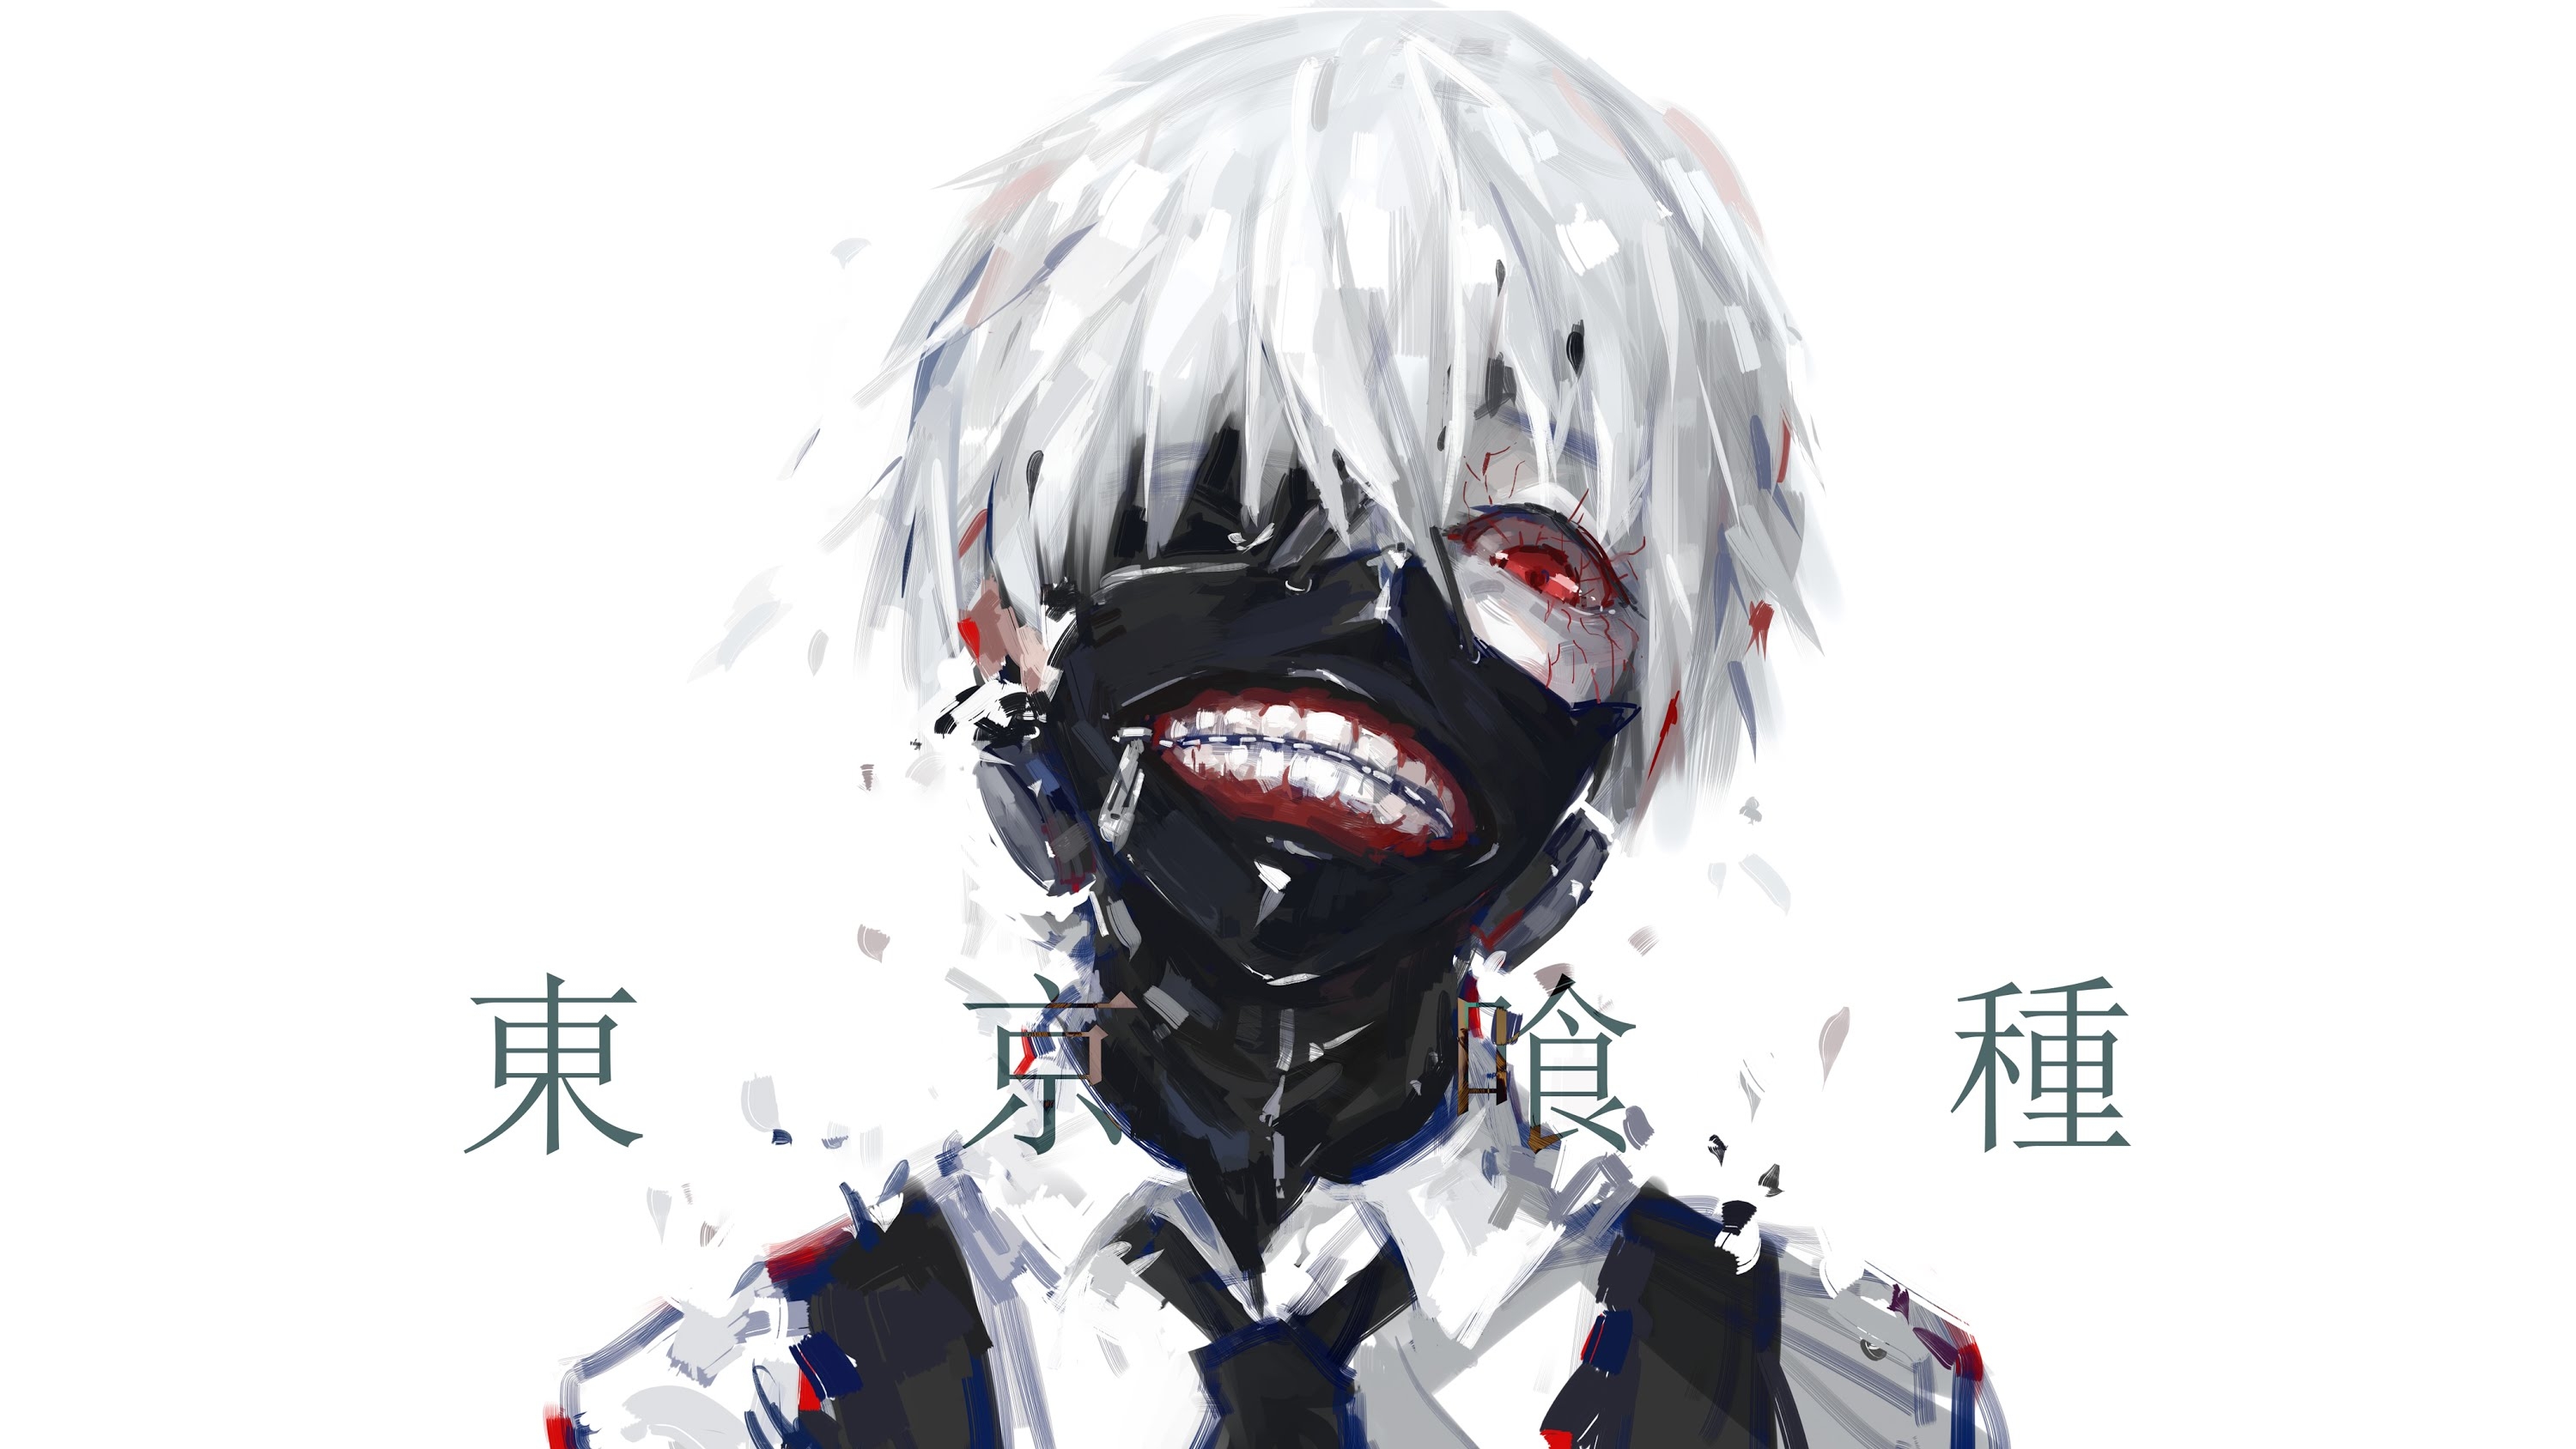 Wallpaper ID 113128  Bleach anime collage eyes glowing eyes  Ulquiorra Cifer Kurosaki Ichigo free download